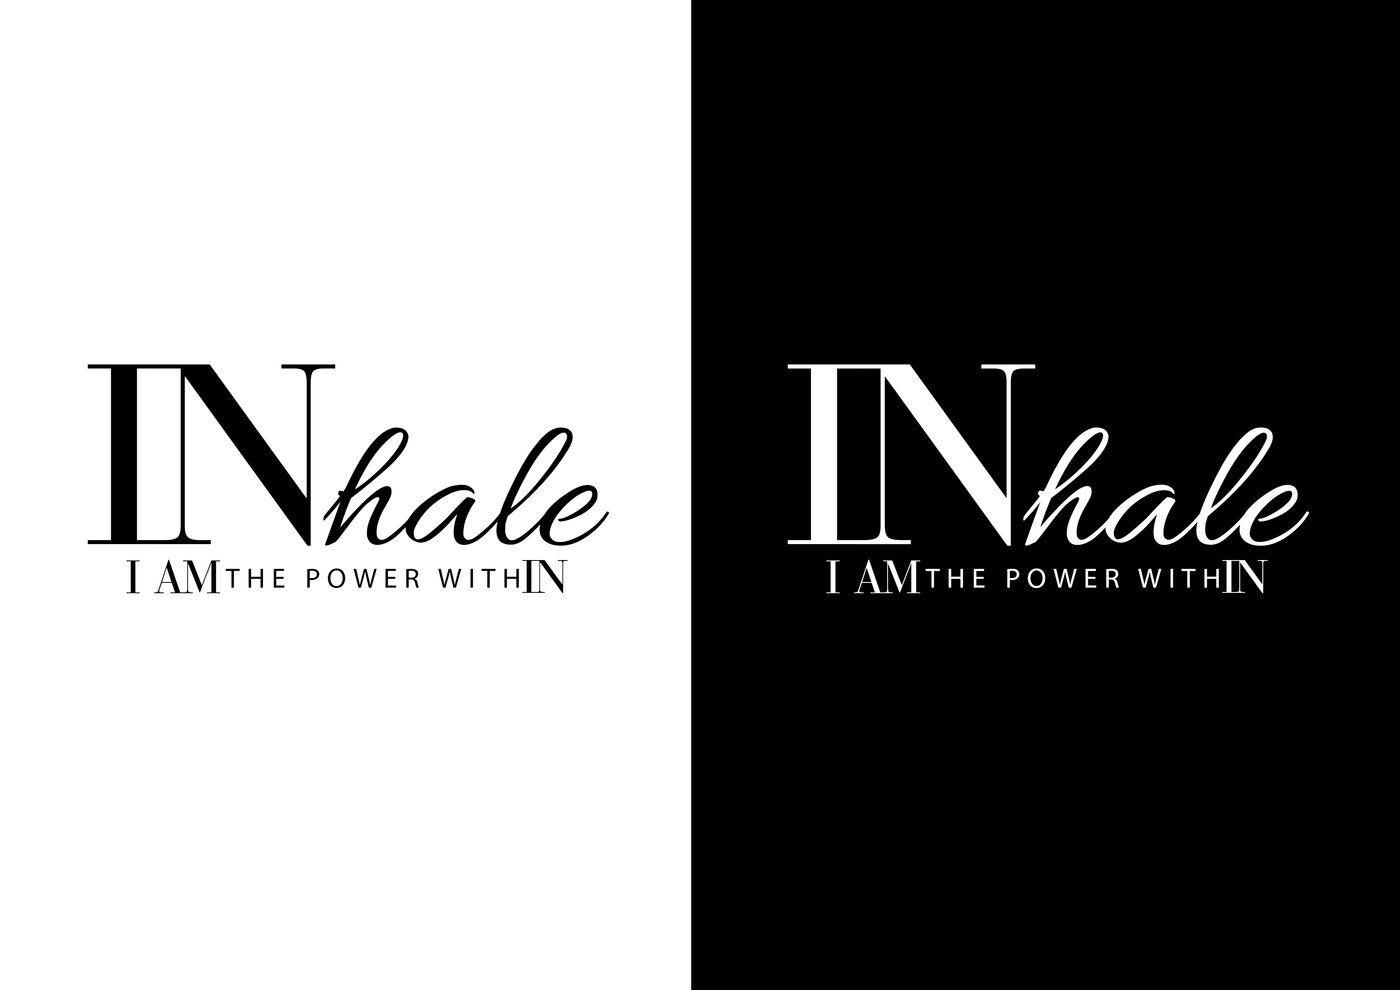 Inhale Logo - Inhale Studio Branding by Namrata Uchil at Coroflot.com